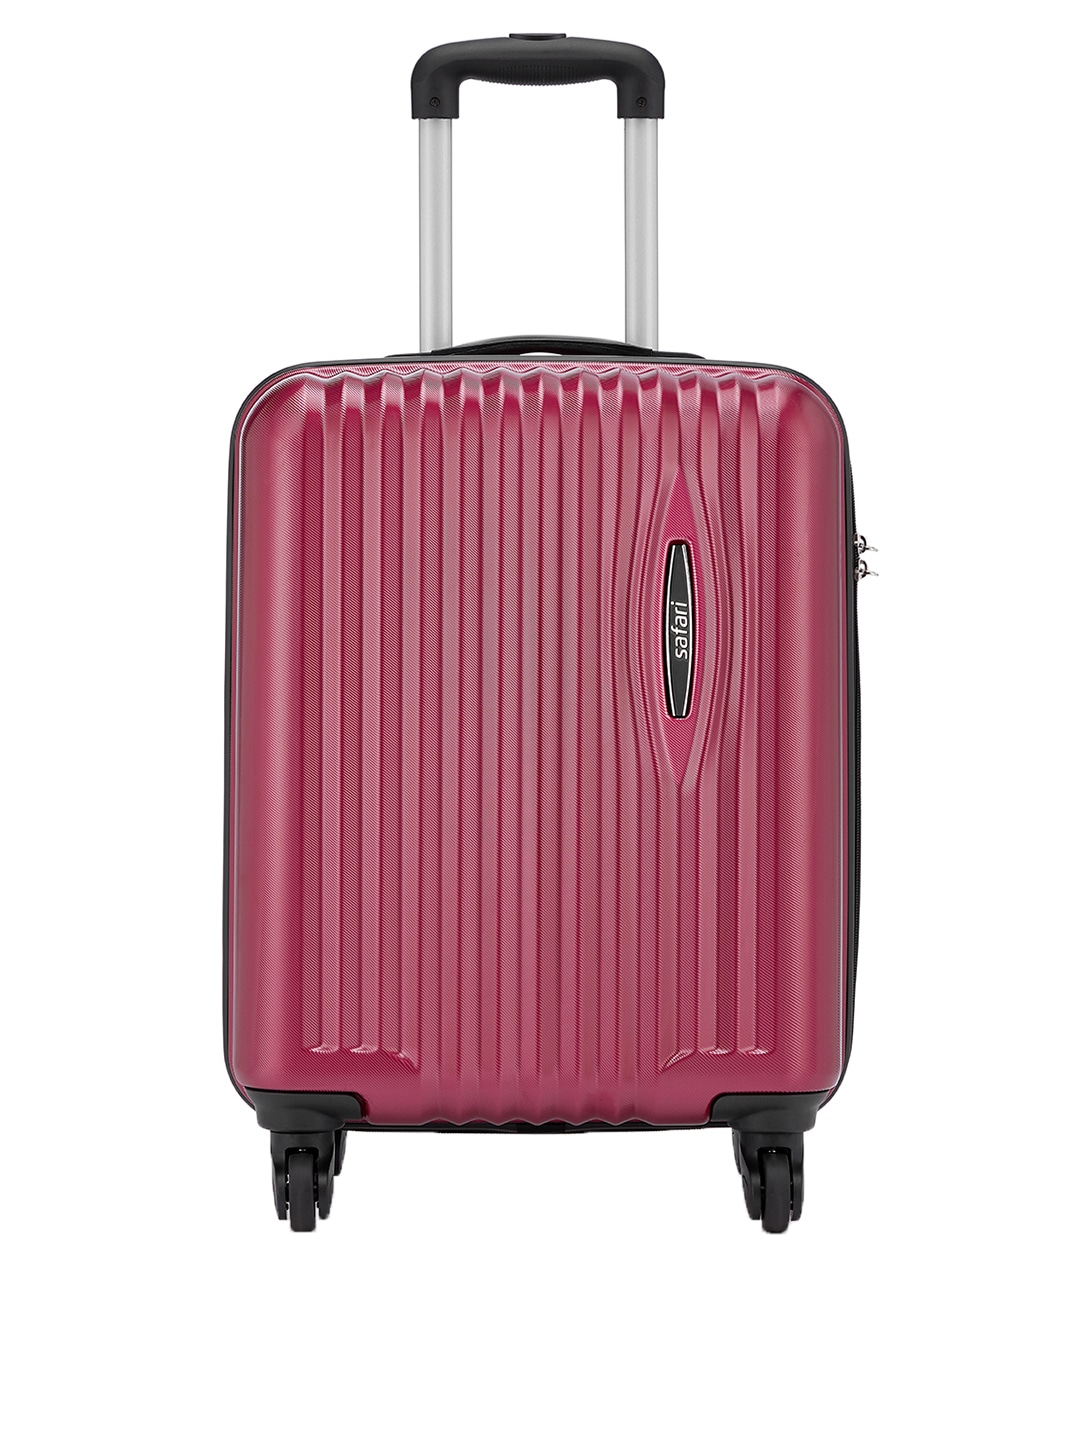 Safari Red 56 cm Premium Hardsided Trolley Suitcase Price in India